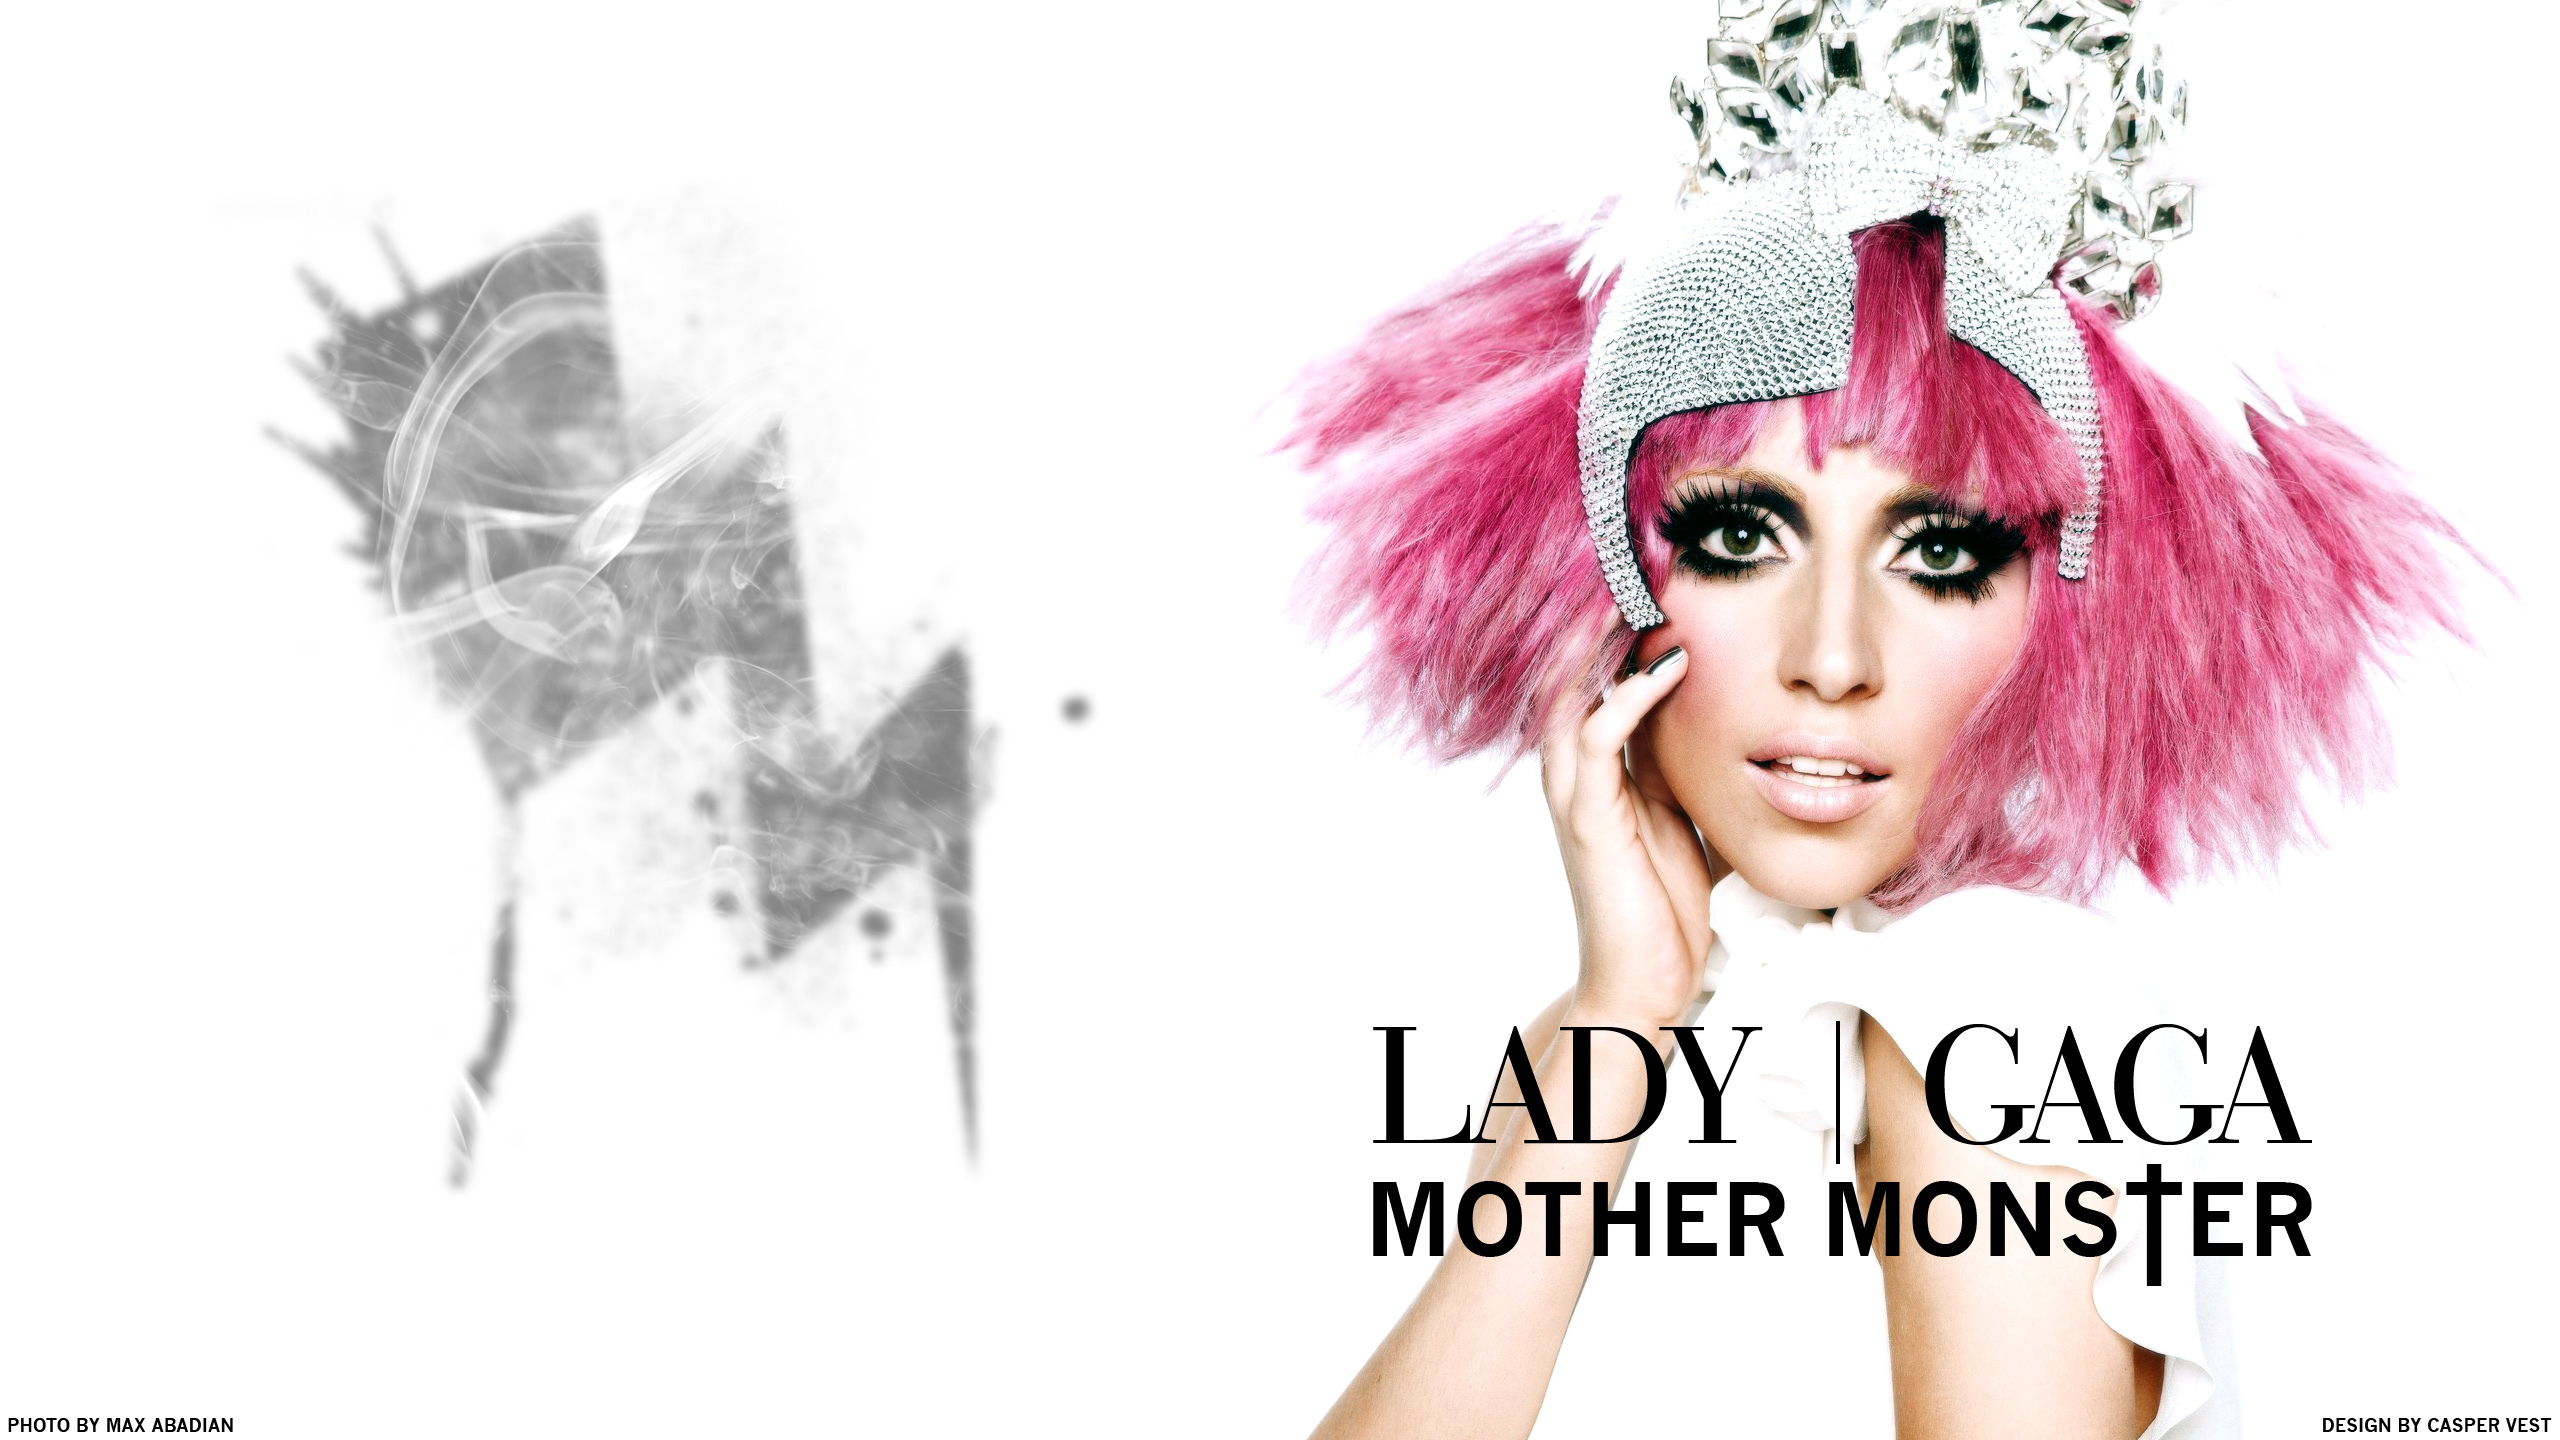 Lady Gaga Mother Monster Wallpaper Lad 壁紙にも使える レディーガガ 画像まとめ Naver まとめ